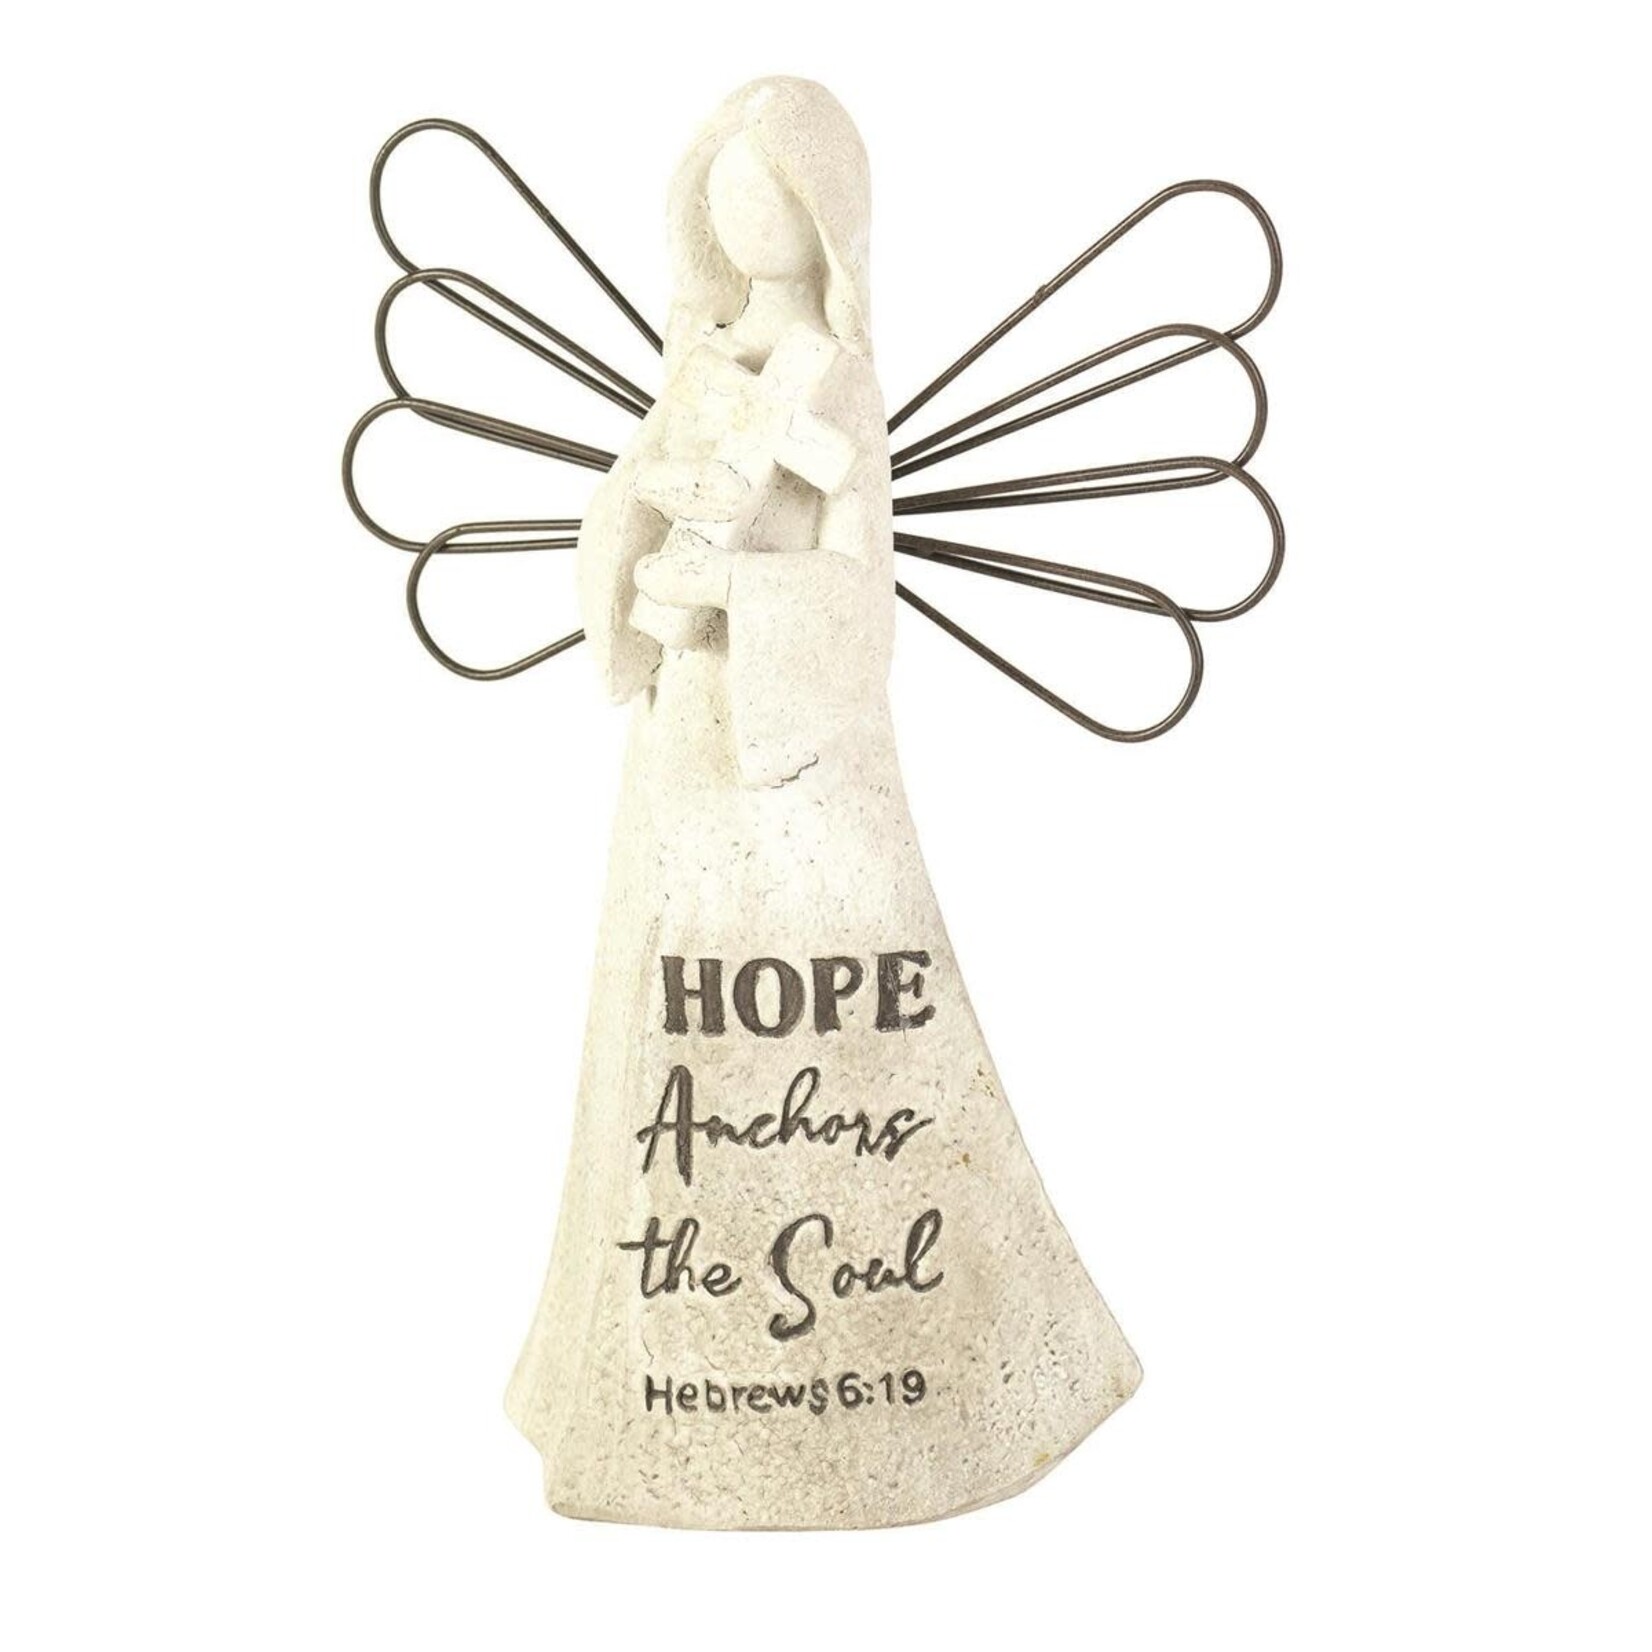 Hope Anchors the Soul Hebrews 6:19 Angel Figurine